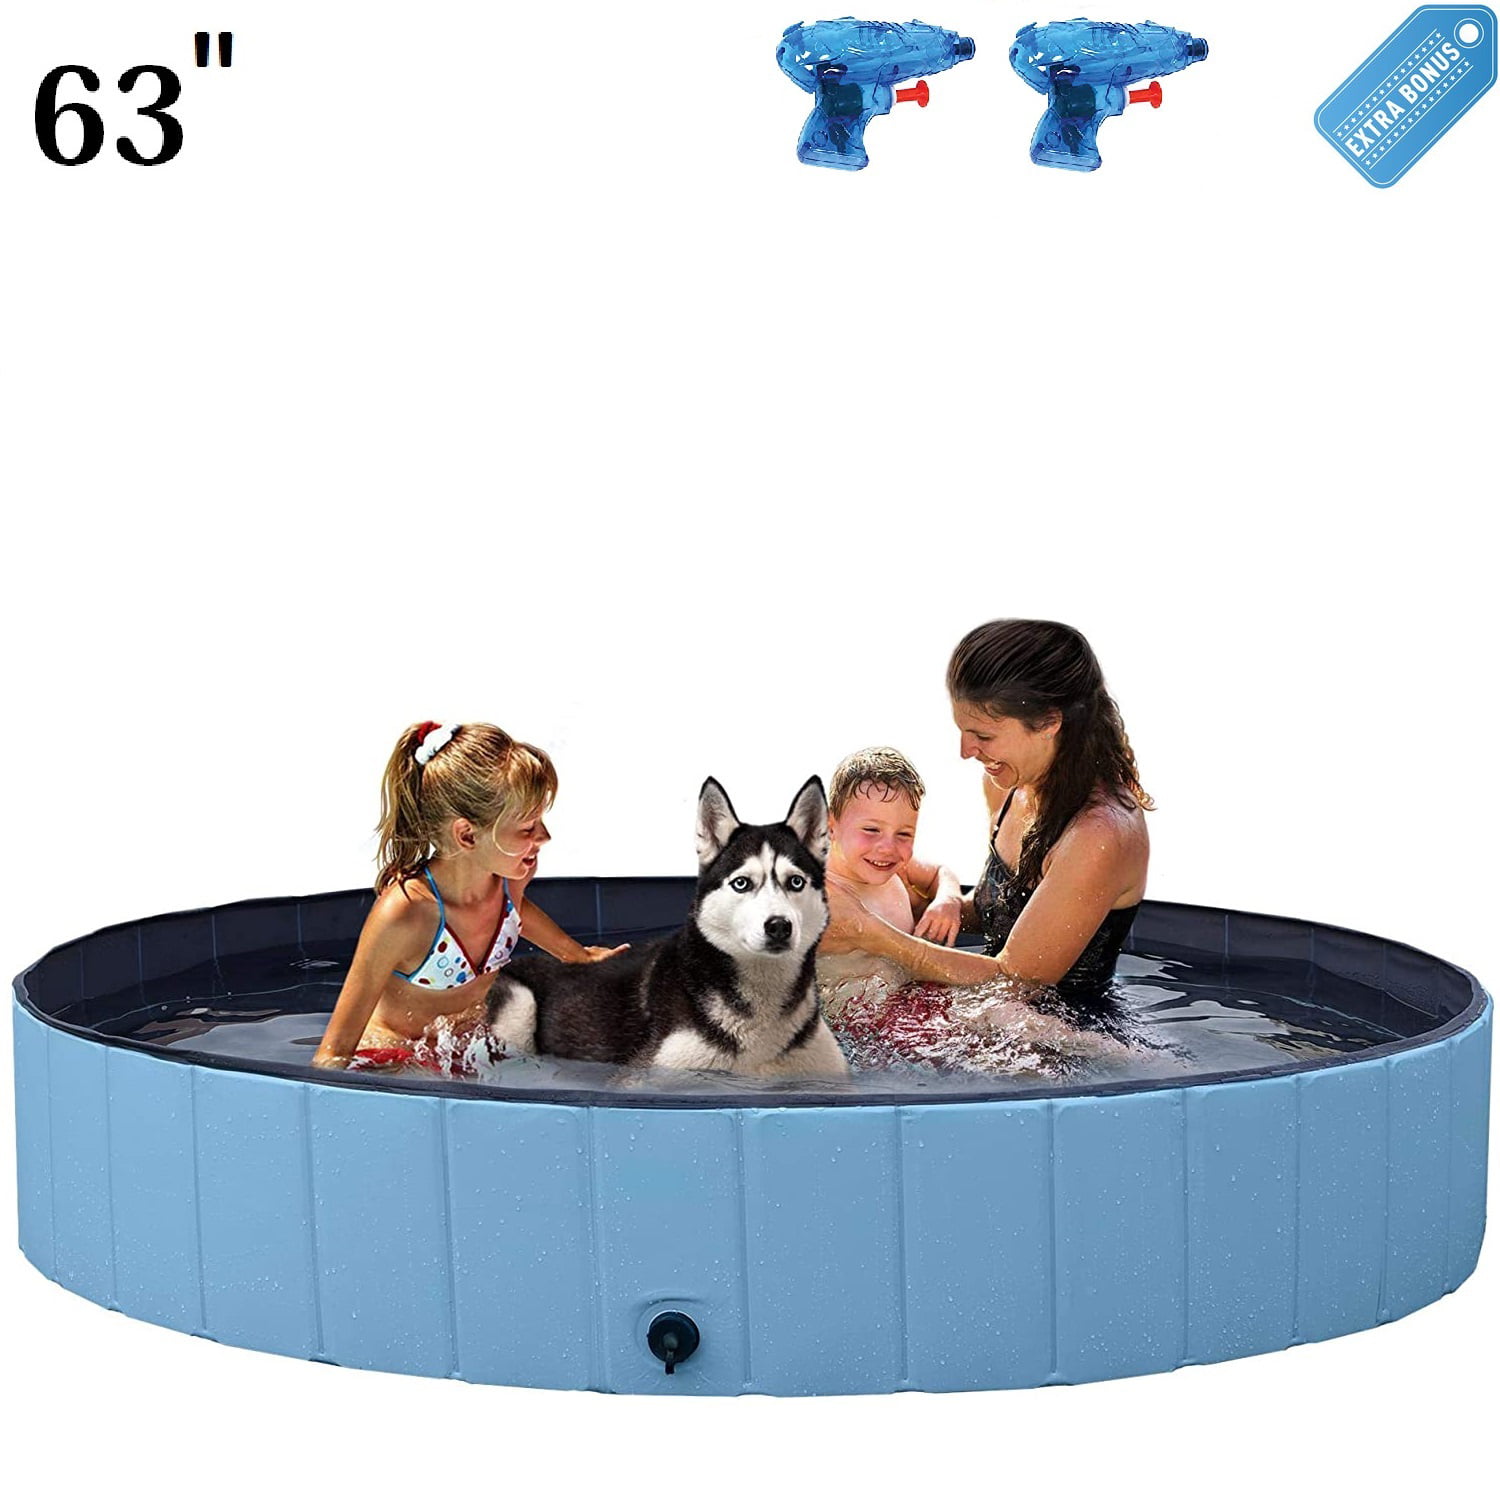 63" Large Foldable Pet Bath Pool Collapsible Dog Pet Pool Bathing Tub